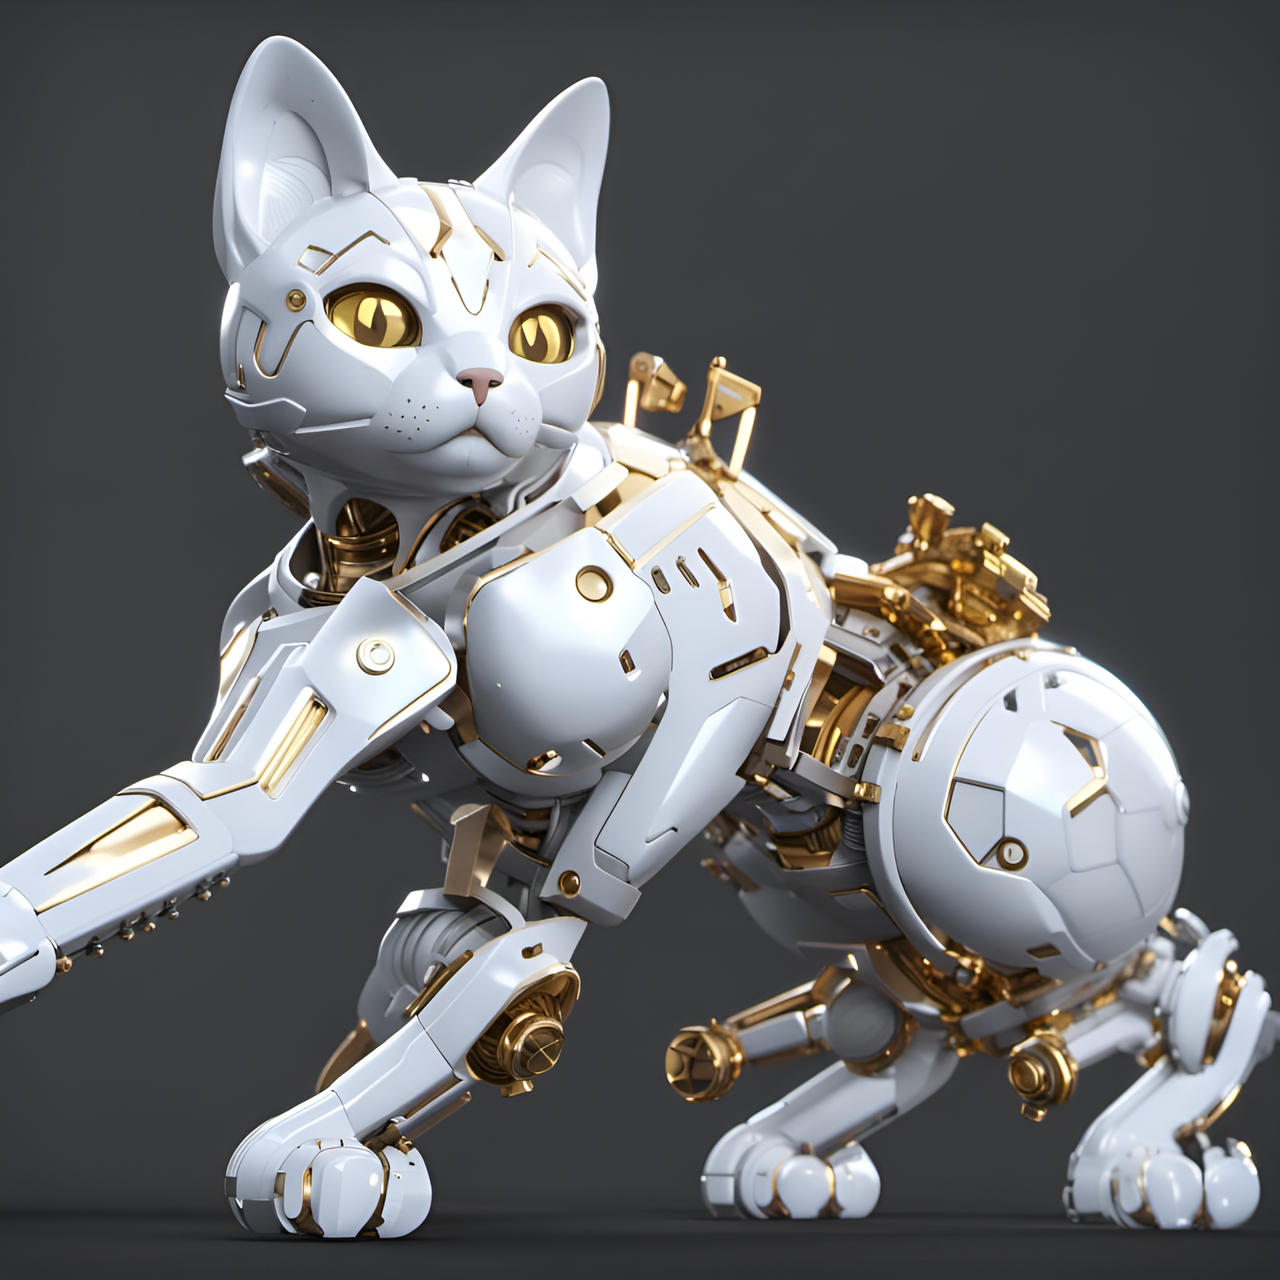 White + Gold robot cat by nobodyhere07 on DeviantArt